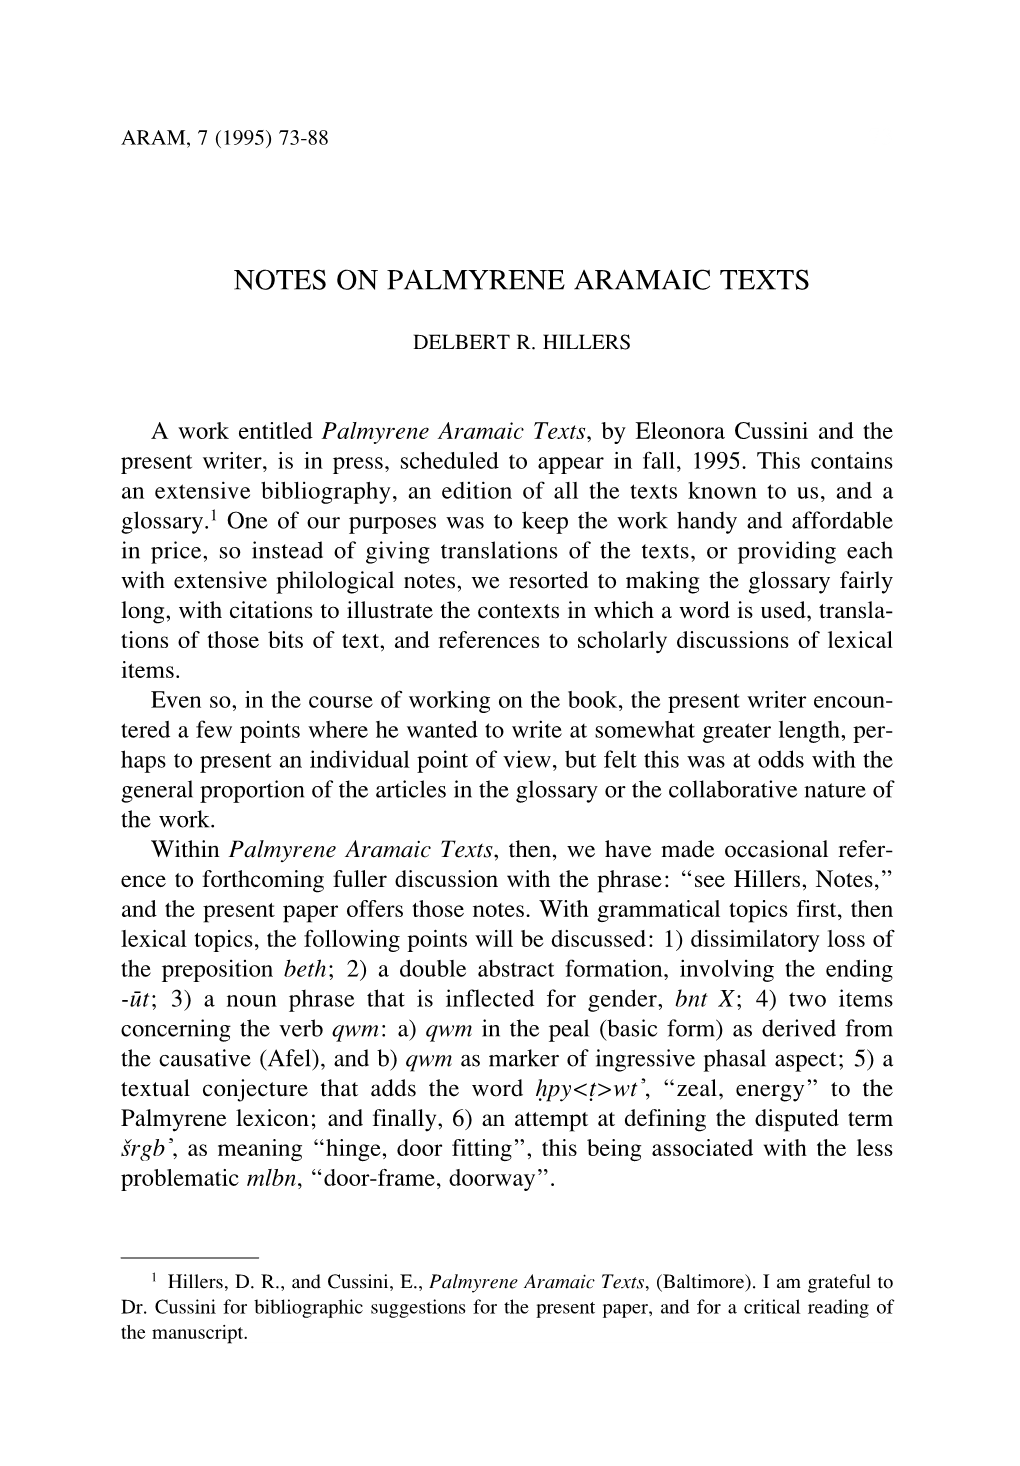 Notes on Palmyrene Aramaic Texts